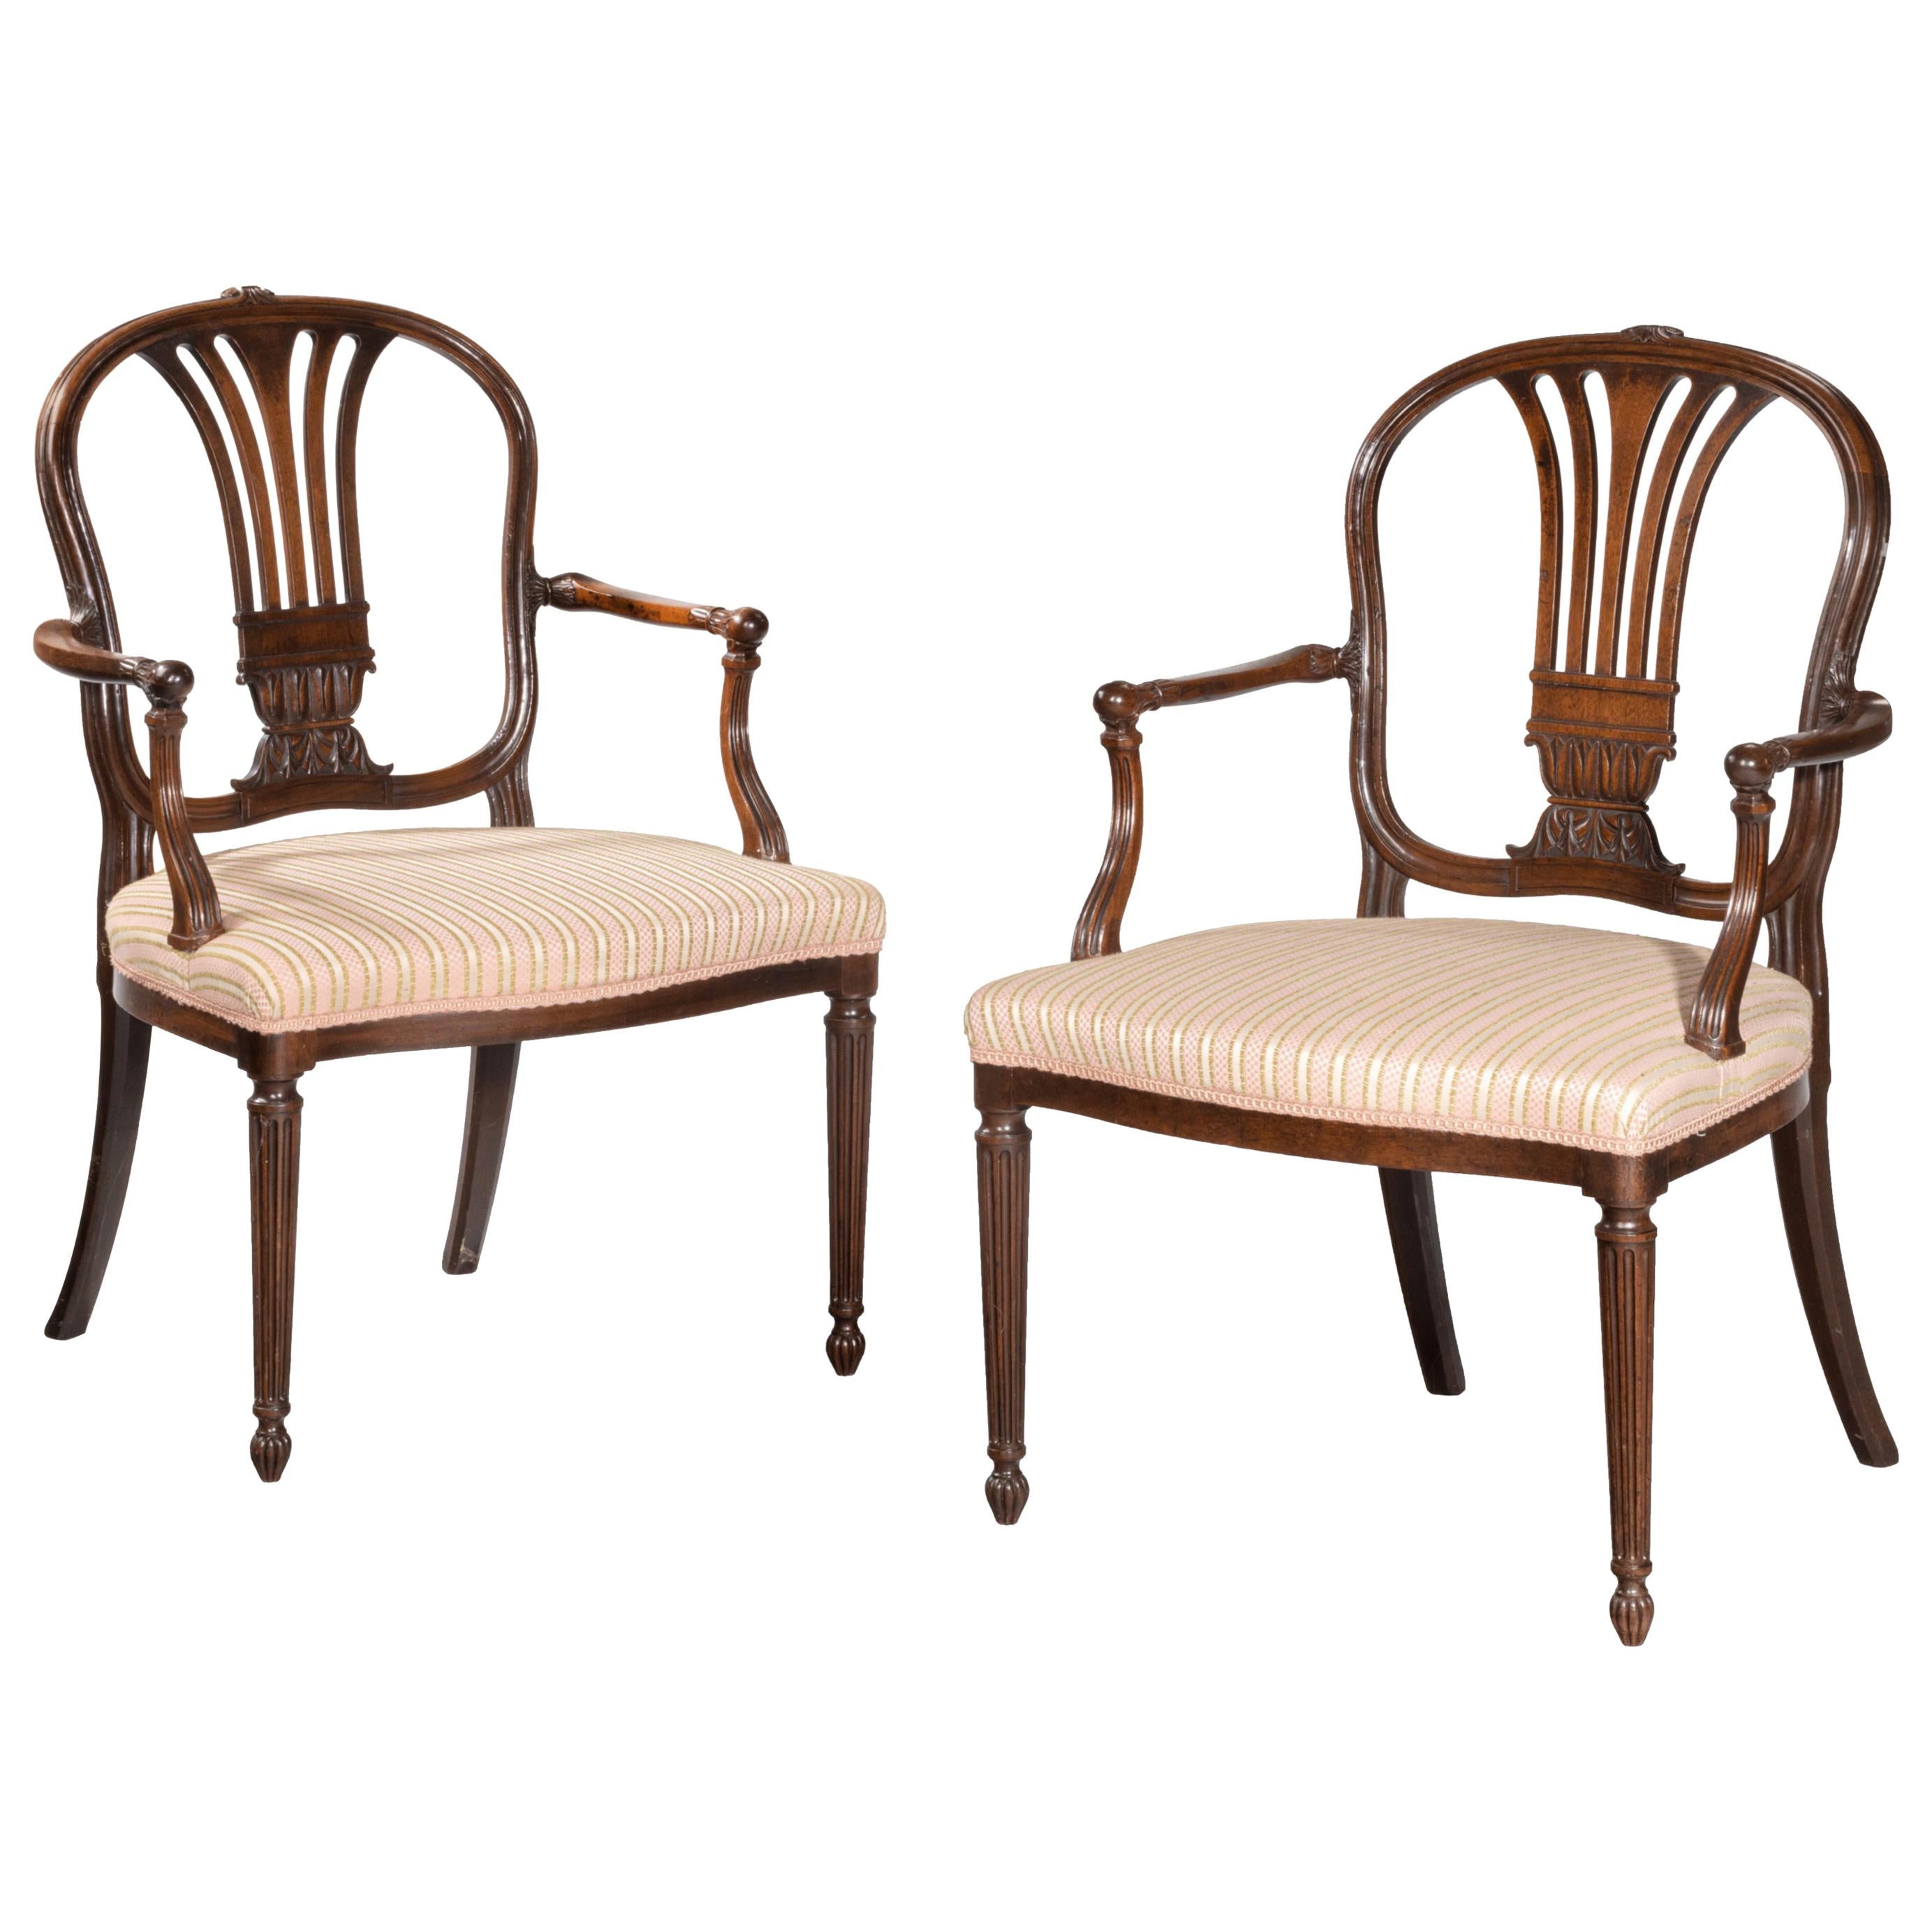 Pair of George III Period Mahogany Elbow Chairs by Robert Manwaring